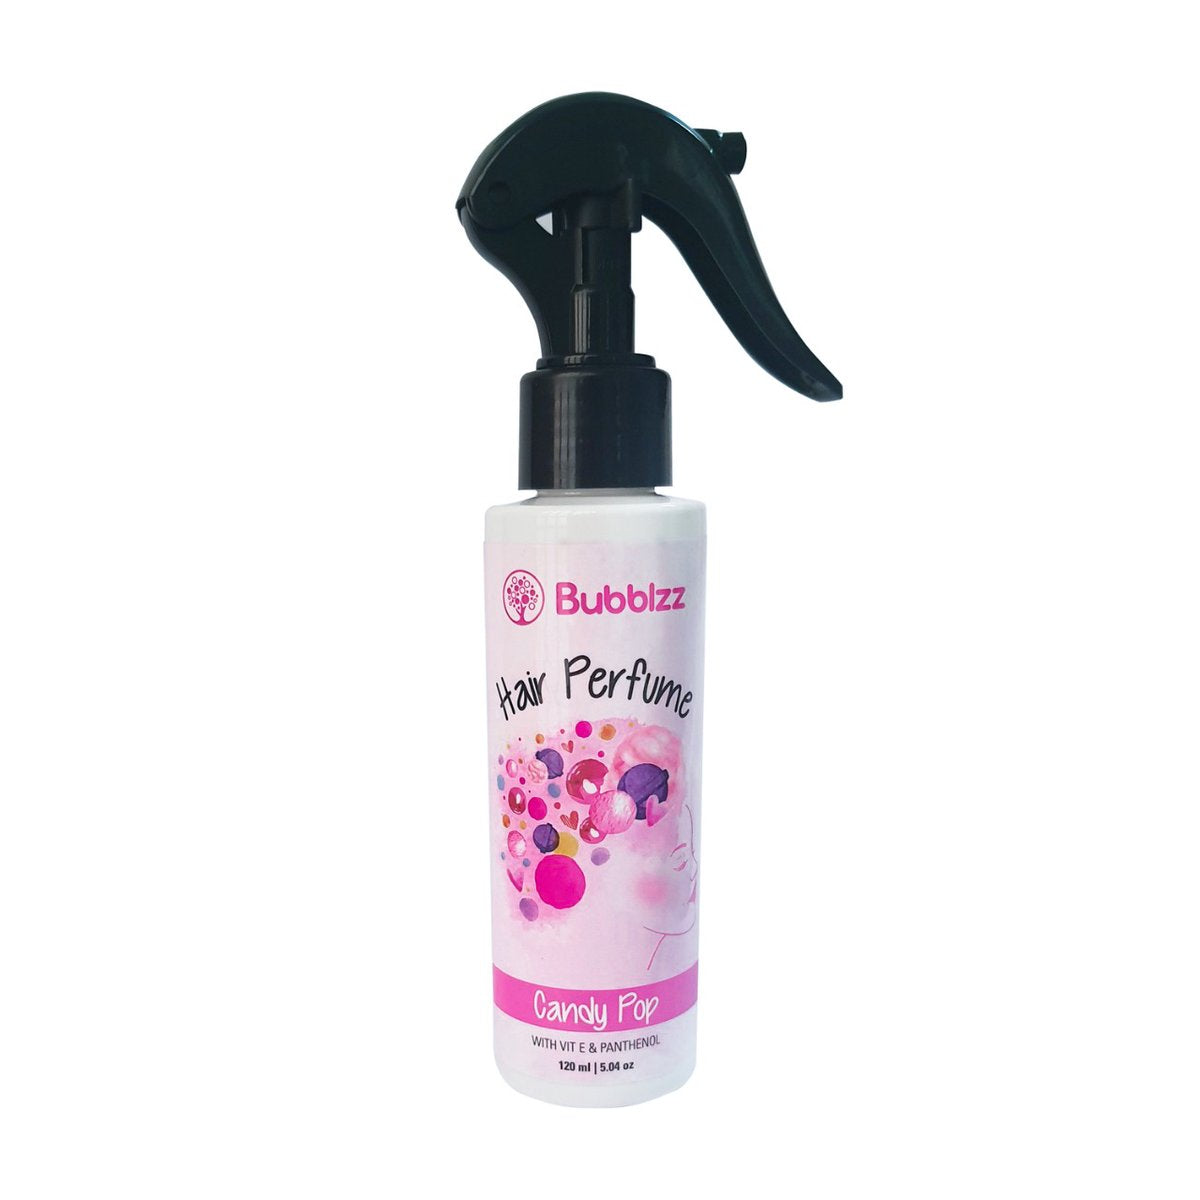 Bubblzz Candy Pop Hair Perfume 120ml